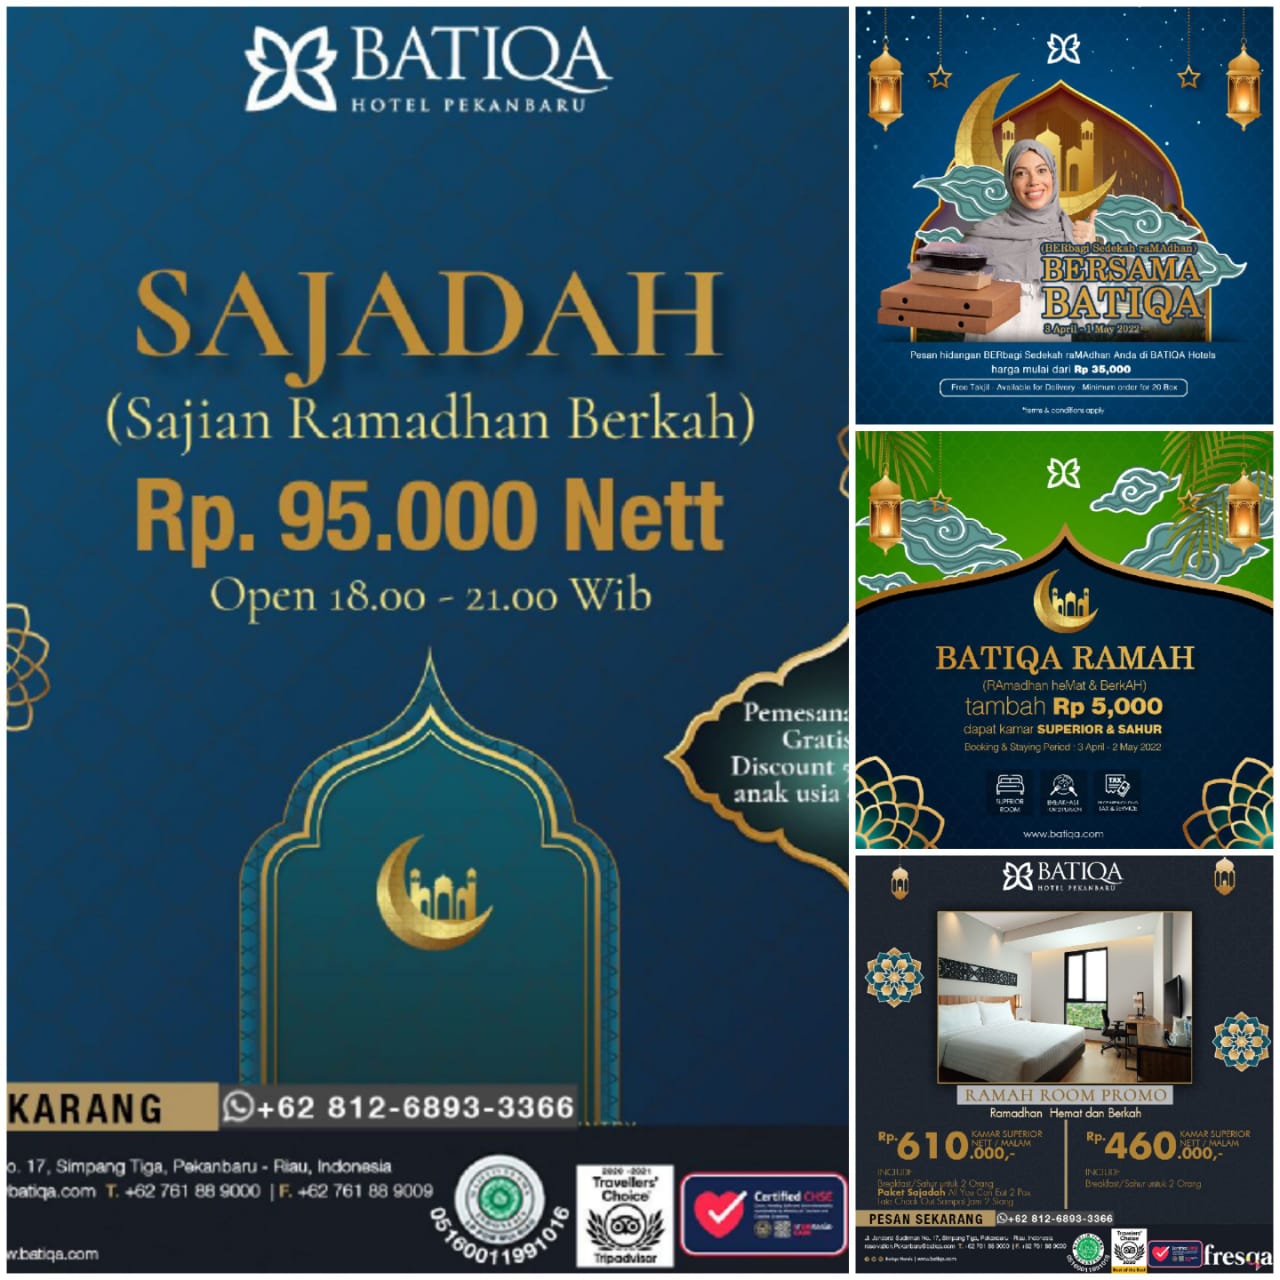 BATIQA Hotel Pekanbaru Hadirkan Promo Sajadah, Sajian Ramadhan Berkah